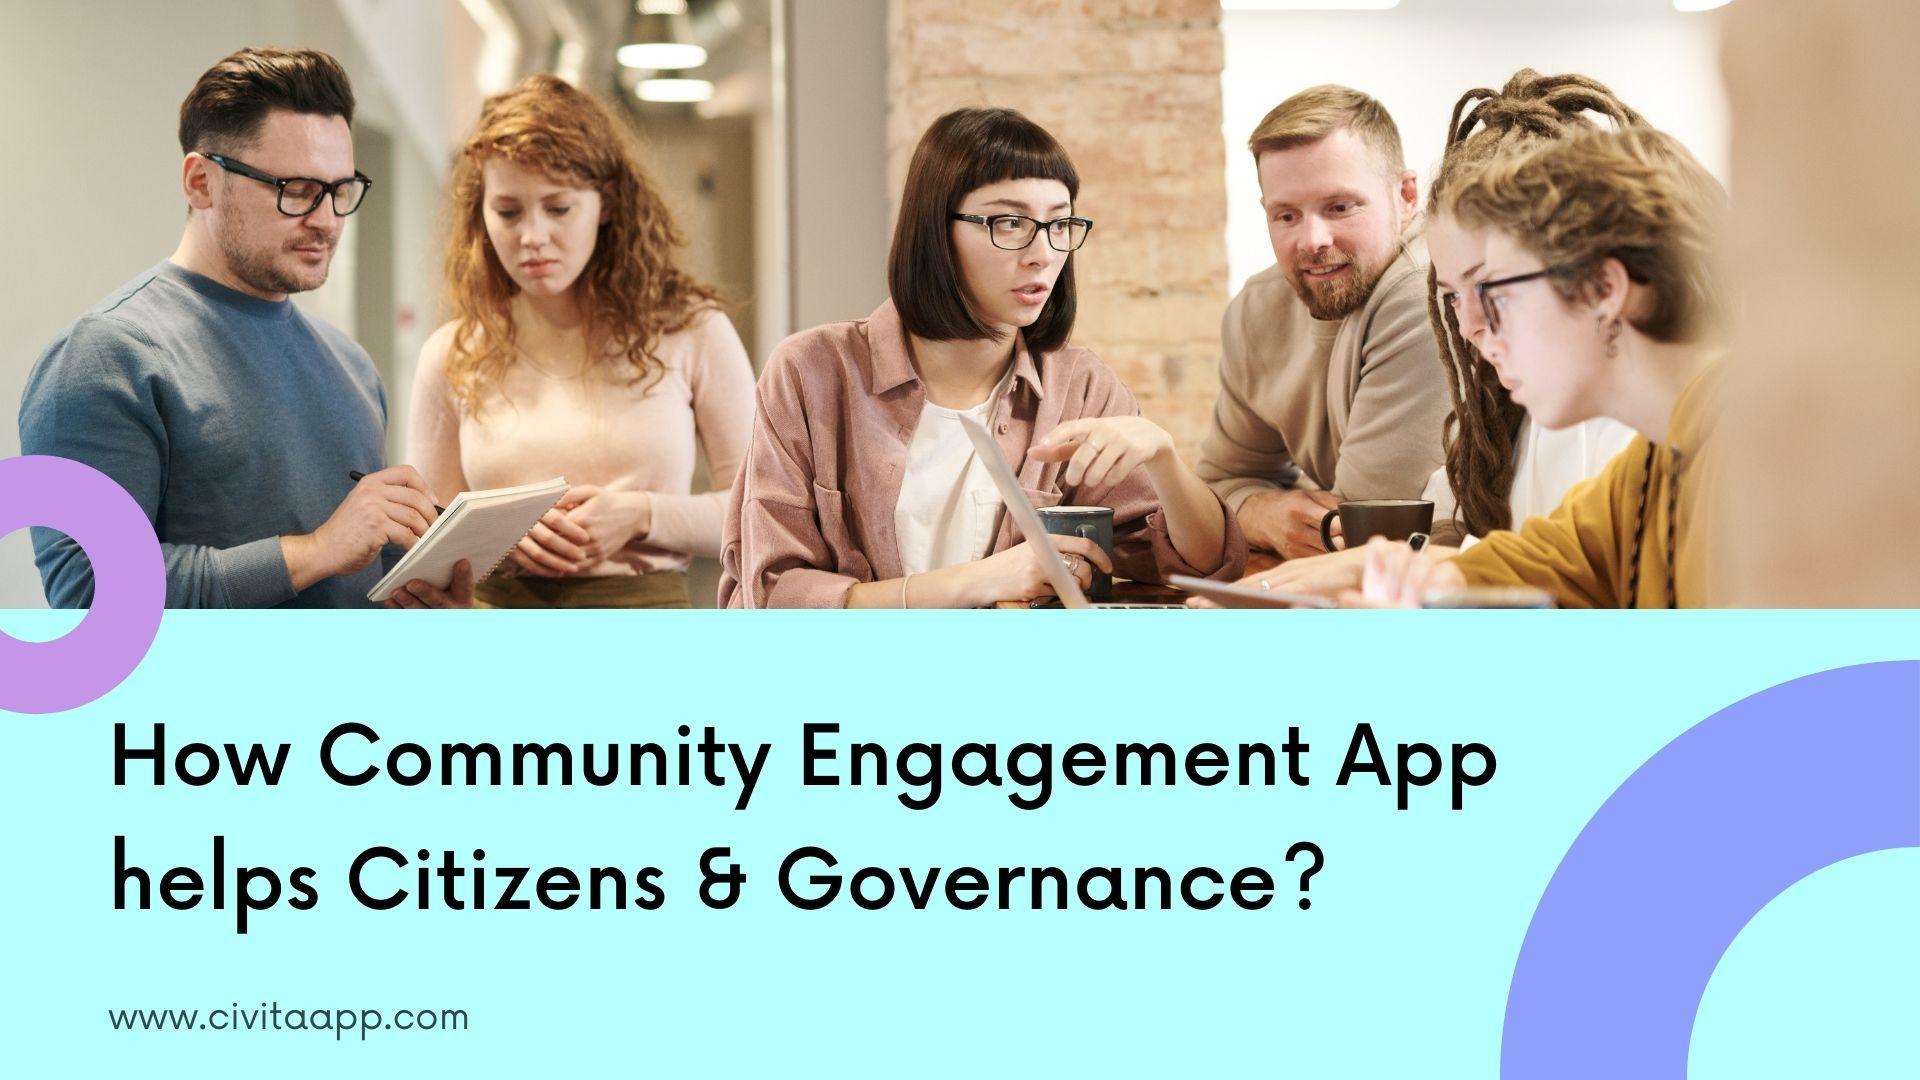 How Community Engagement App helps Citizens & Governance